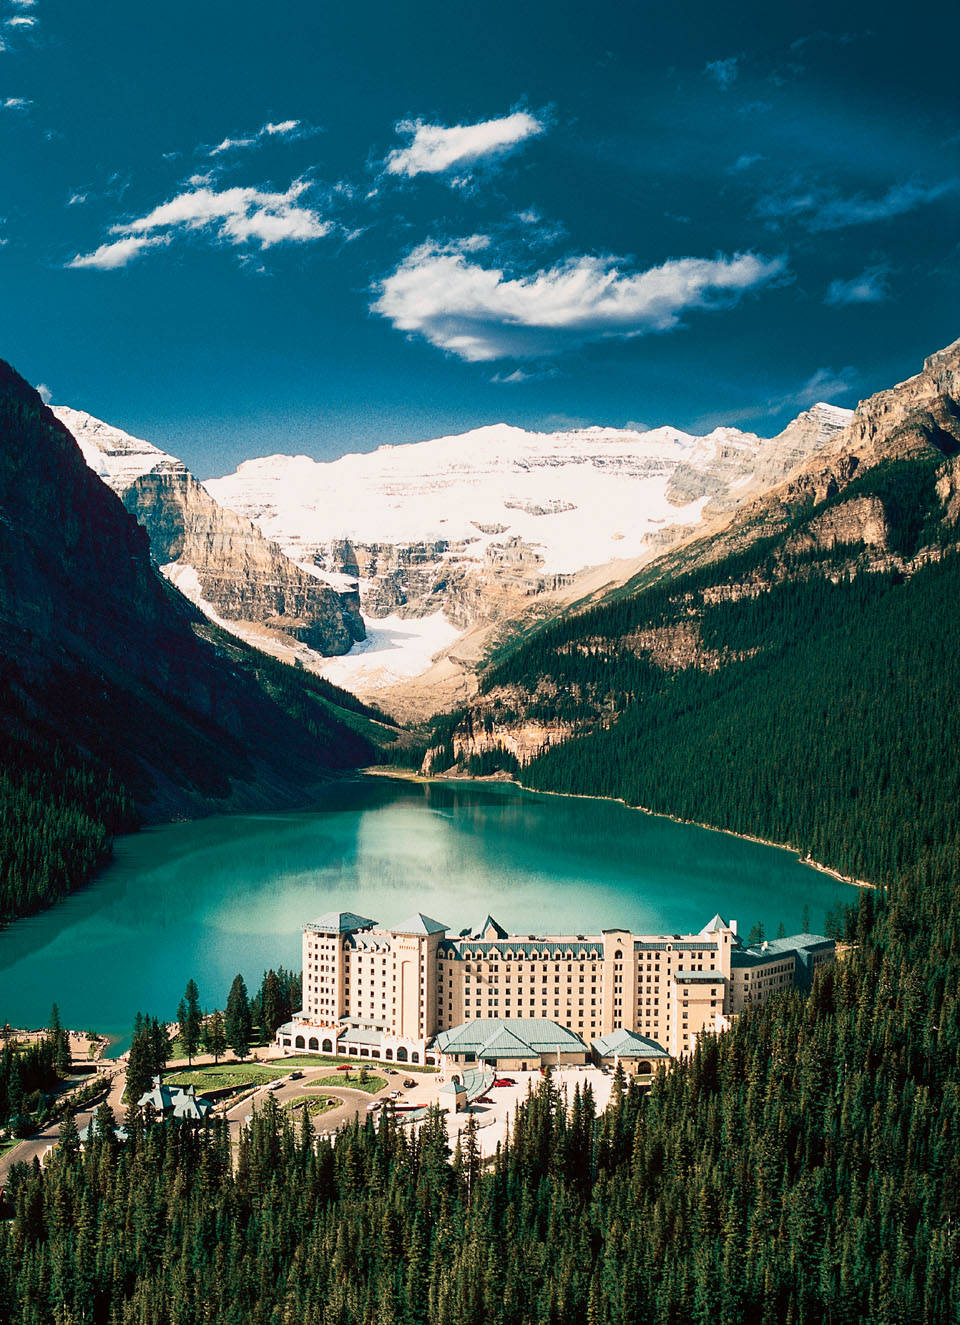 Fairmont Railway Hotels Canada - Top 10 Fairmont Railway Hotels Canada